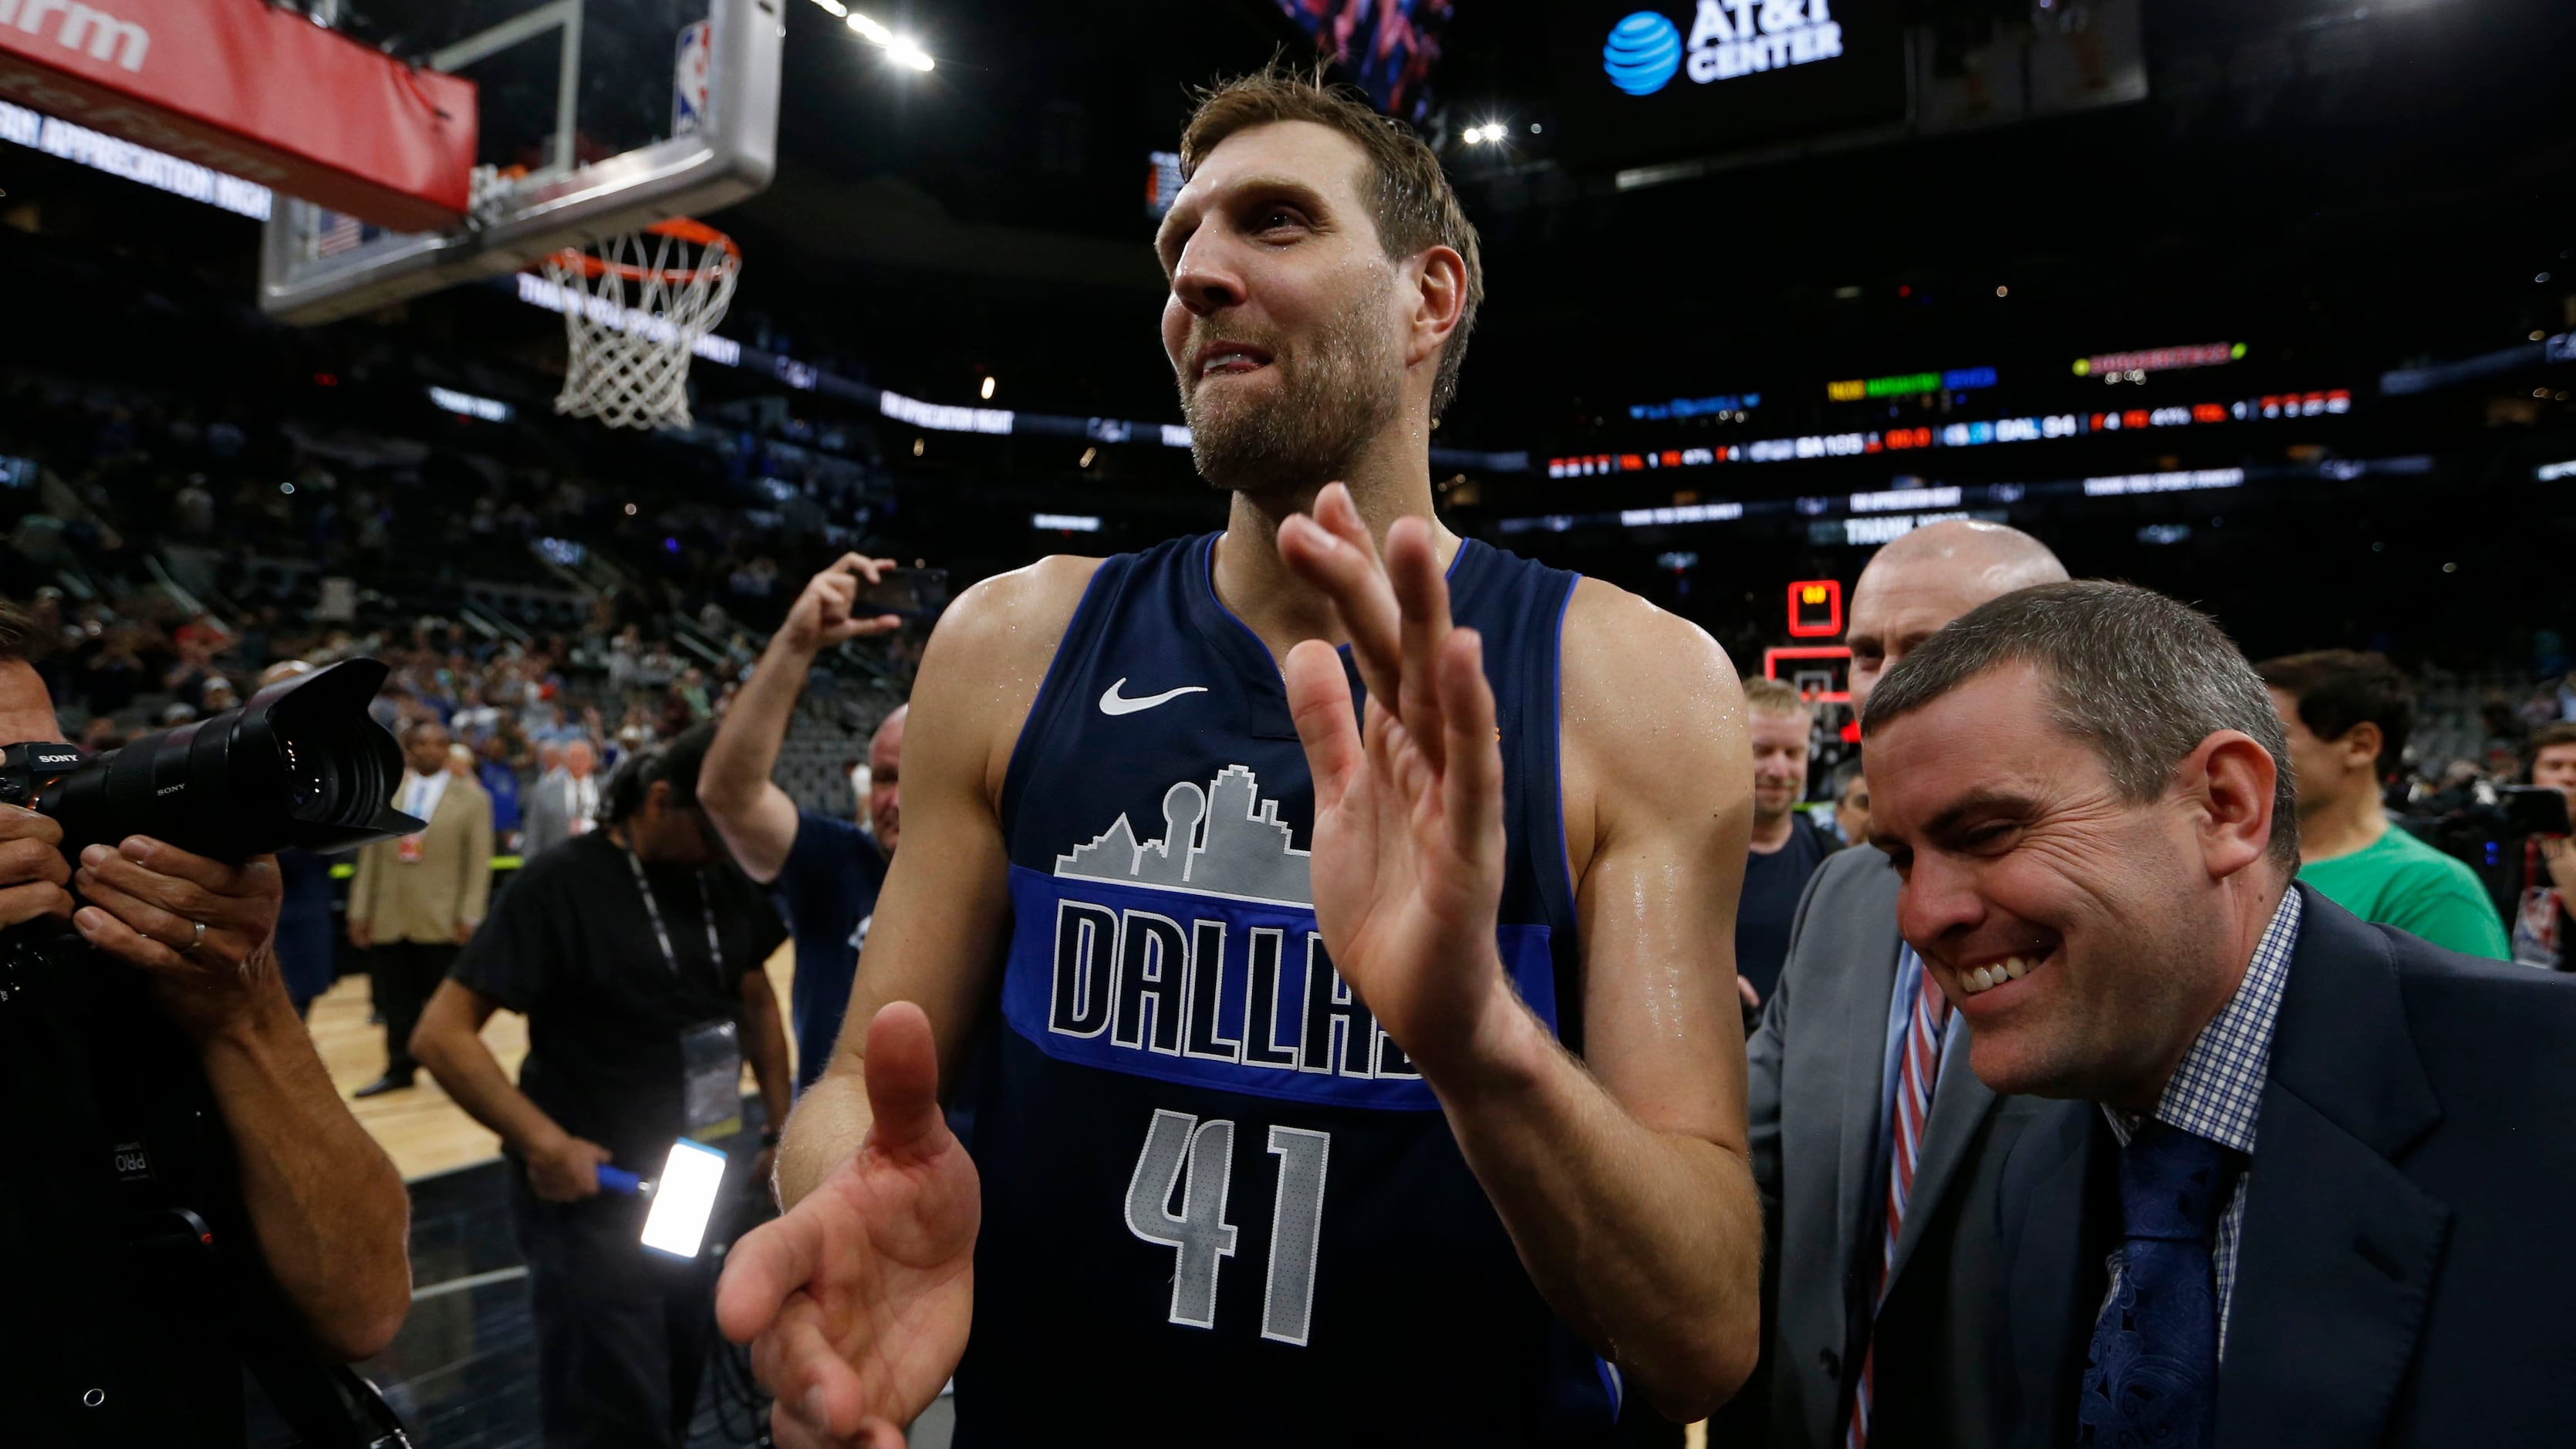 Ticket Prices Are High For Dallas Mavericks' Dirk Nowitzki Jersey Retirement